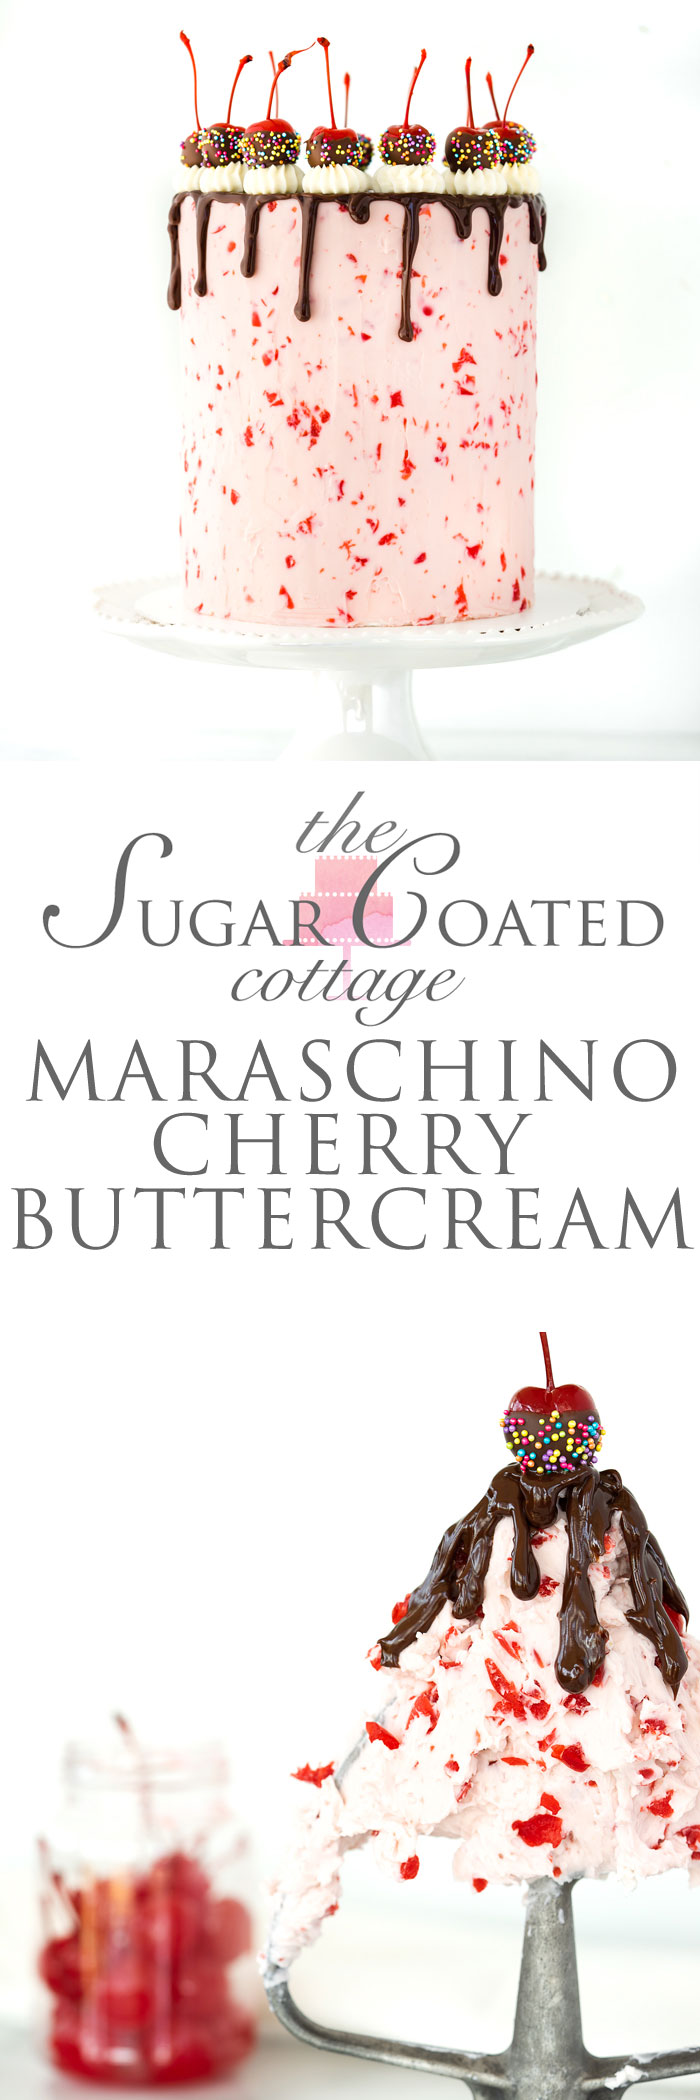 Maraschino Cherry Buttercream Recipe. One amazing buttercream studded with maraschino cherries. | www.thesugarcoatedcottage.com #buttercream #frosting